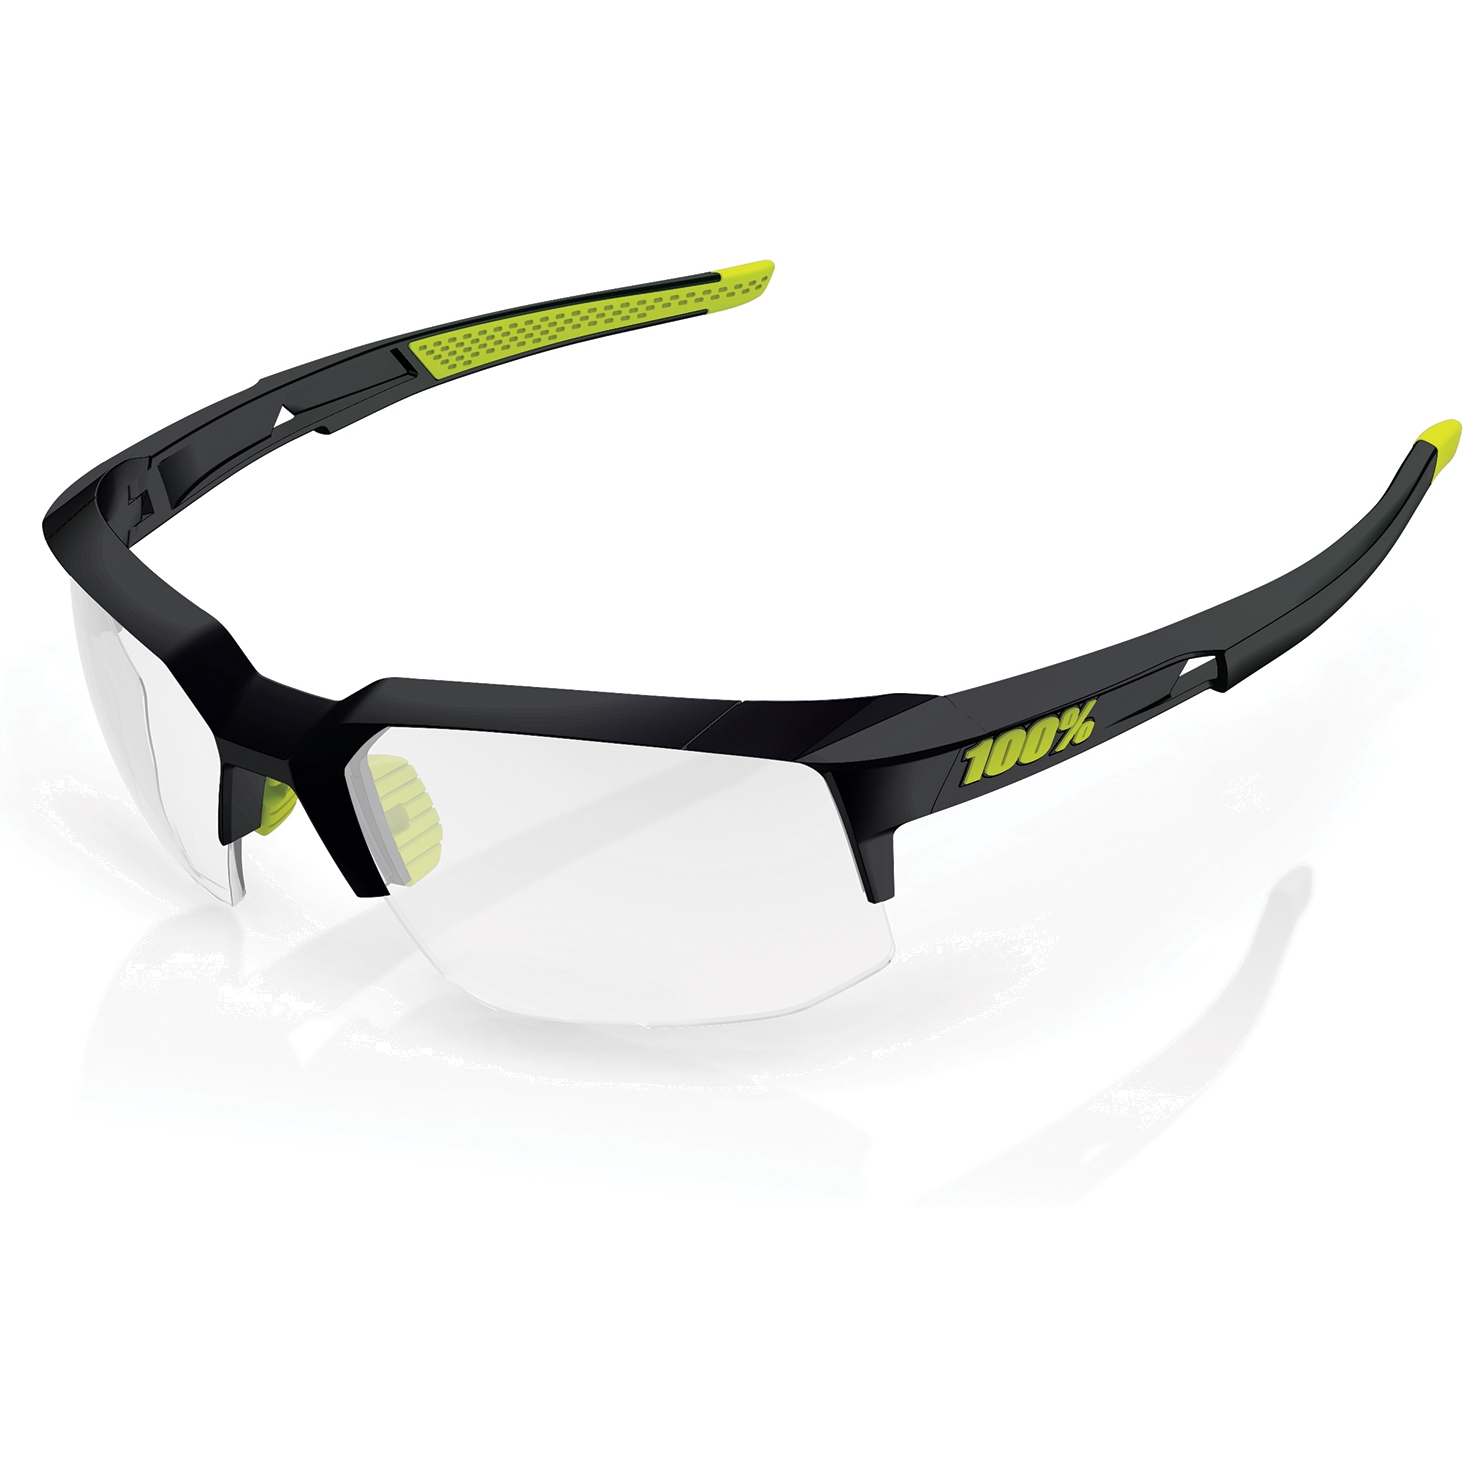 Productfoto van 100% Speedcoupe Glasses - Photochromic Lens - gloss black